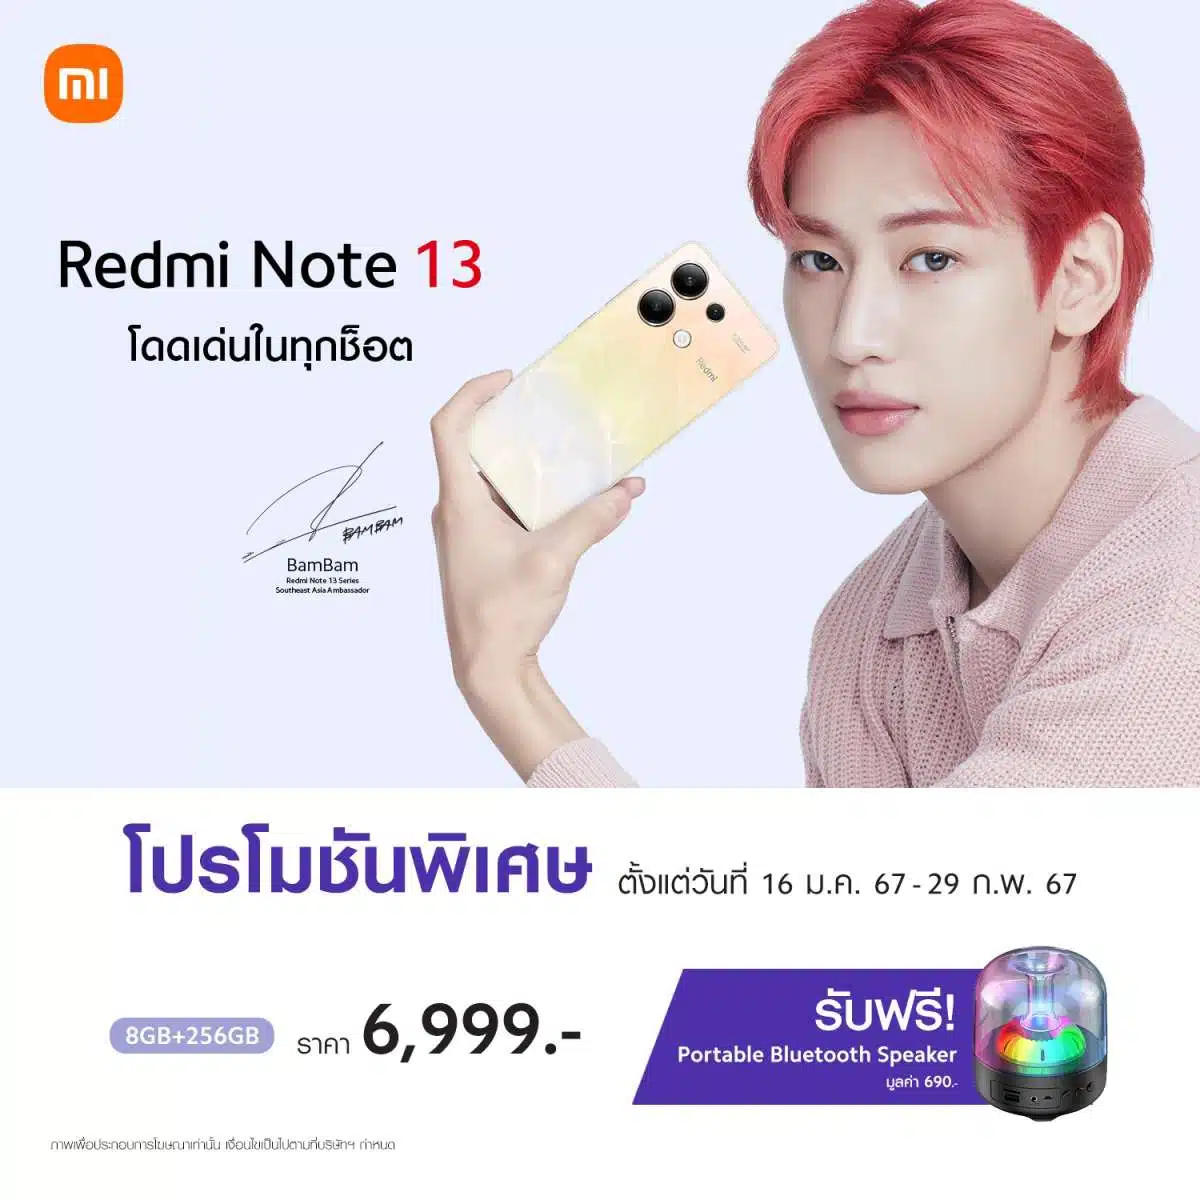 Redmi Note 13 ราคา